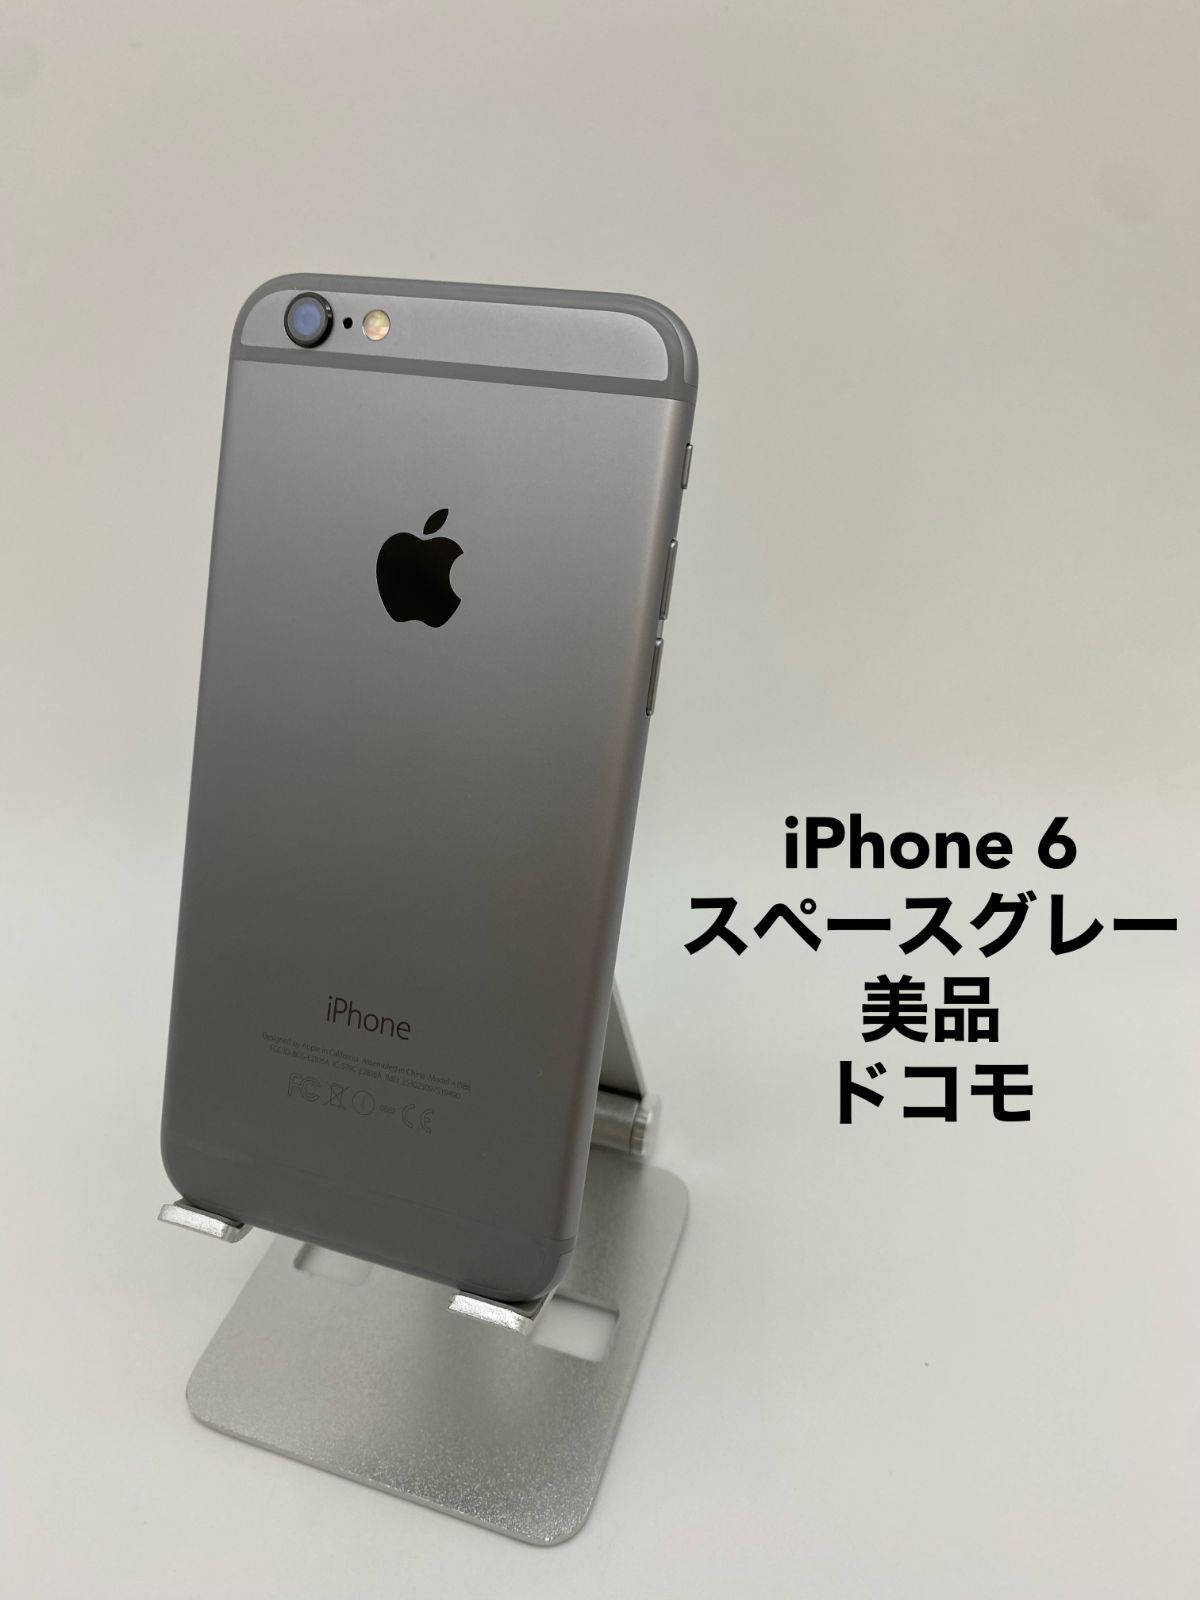 iPhone6 64GB ドコモ版 スペースグレイ - スマートフォン本体